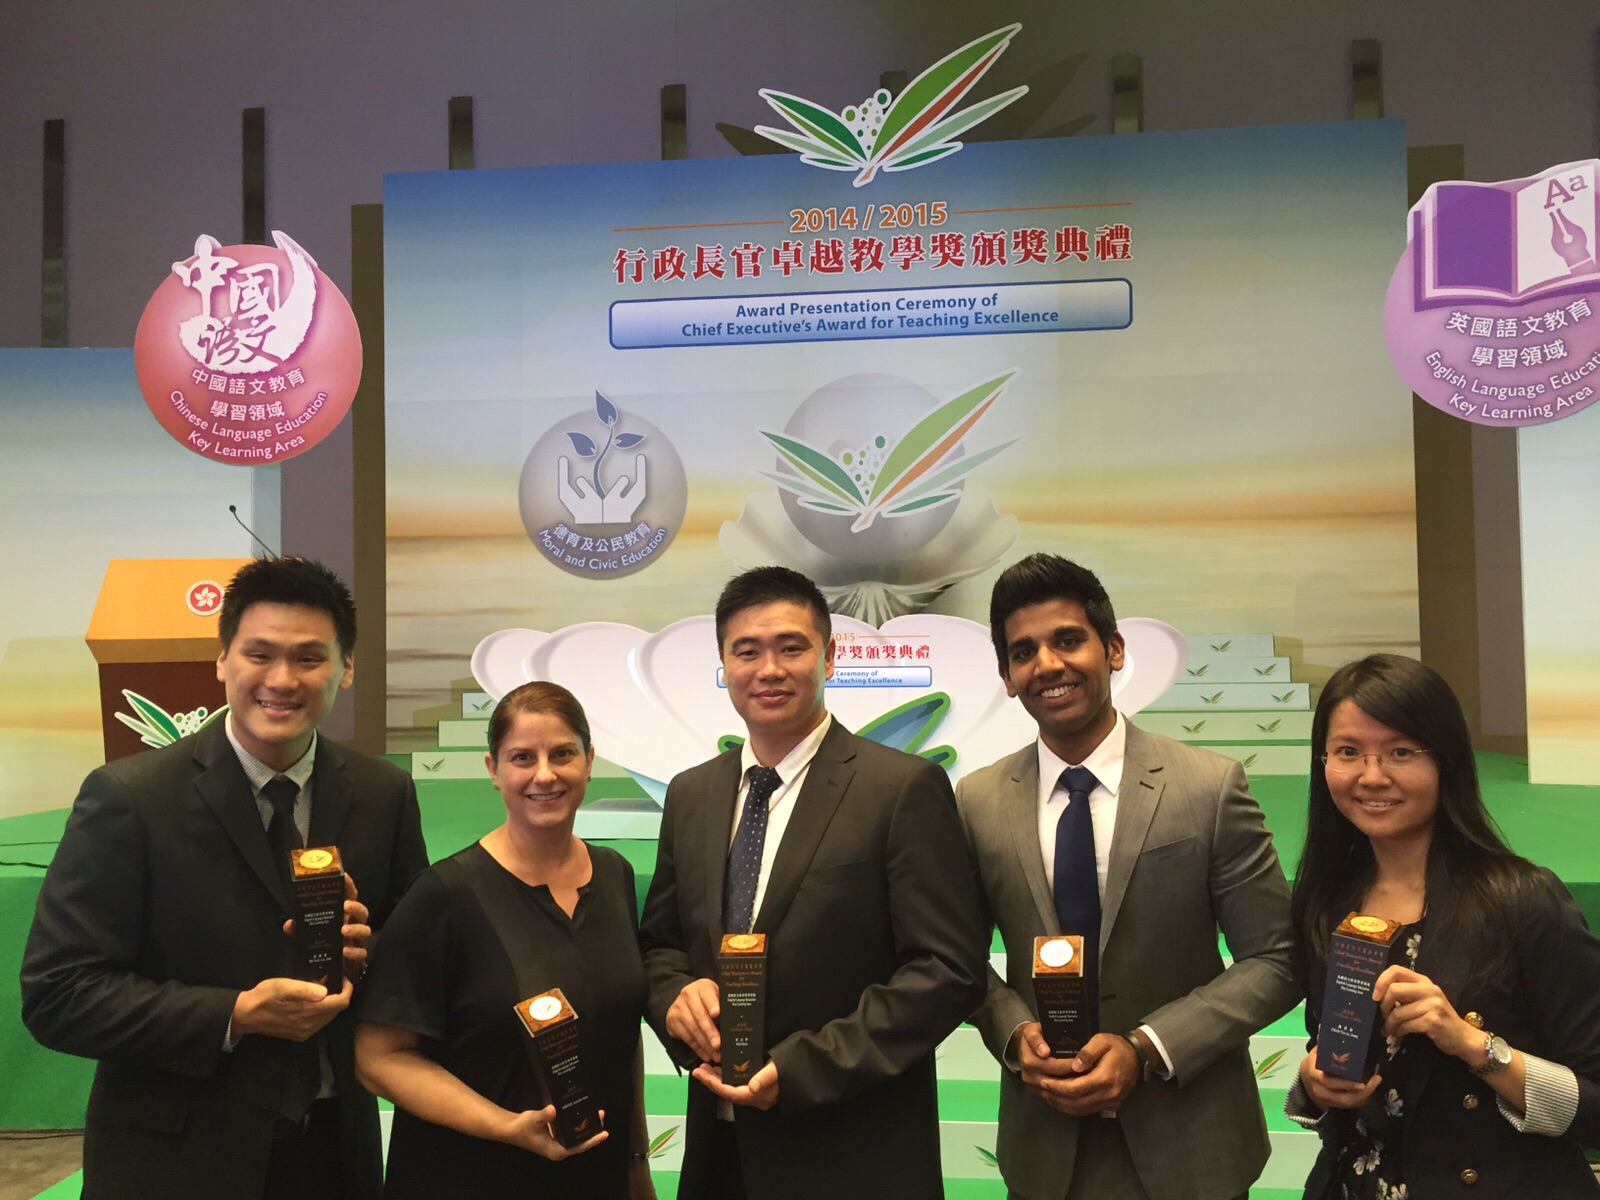 From left: Mr. Sam Ho, Ms. Jennifer Horgos, Mr. Elvin Tao (team leader), Mr. Thair Mohammad and Ms. Jenny Chan